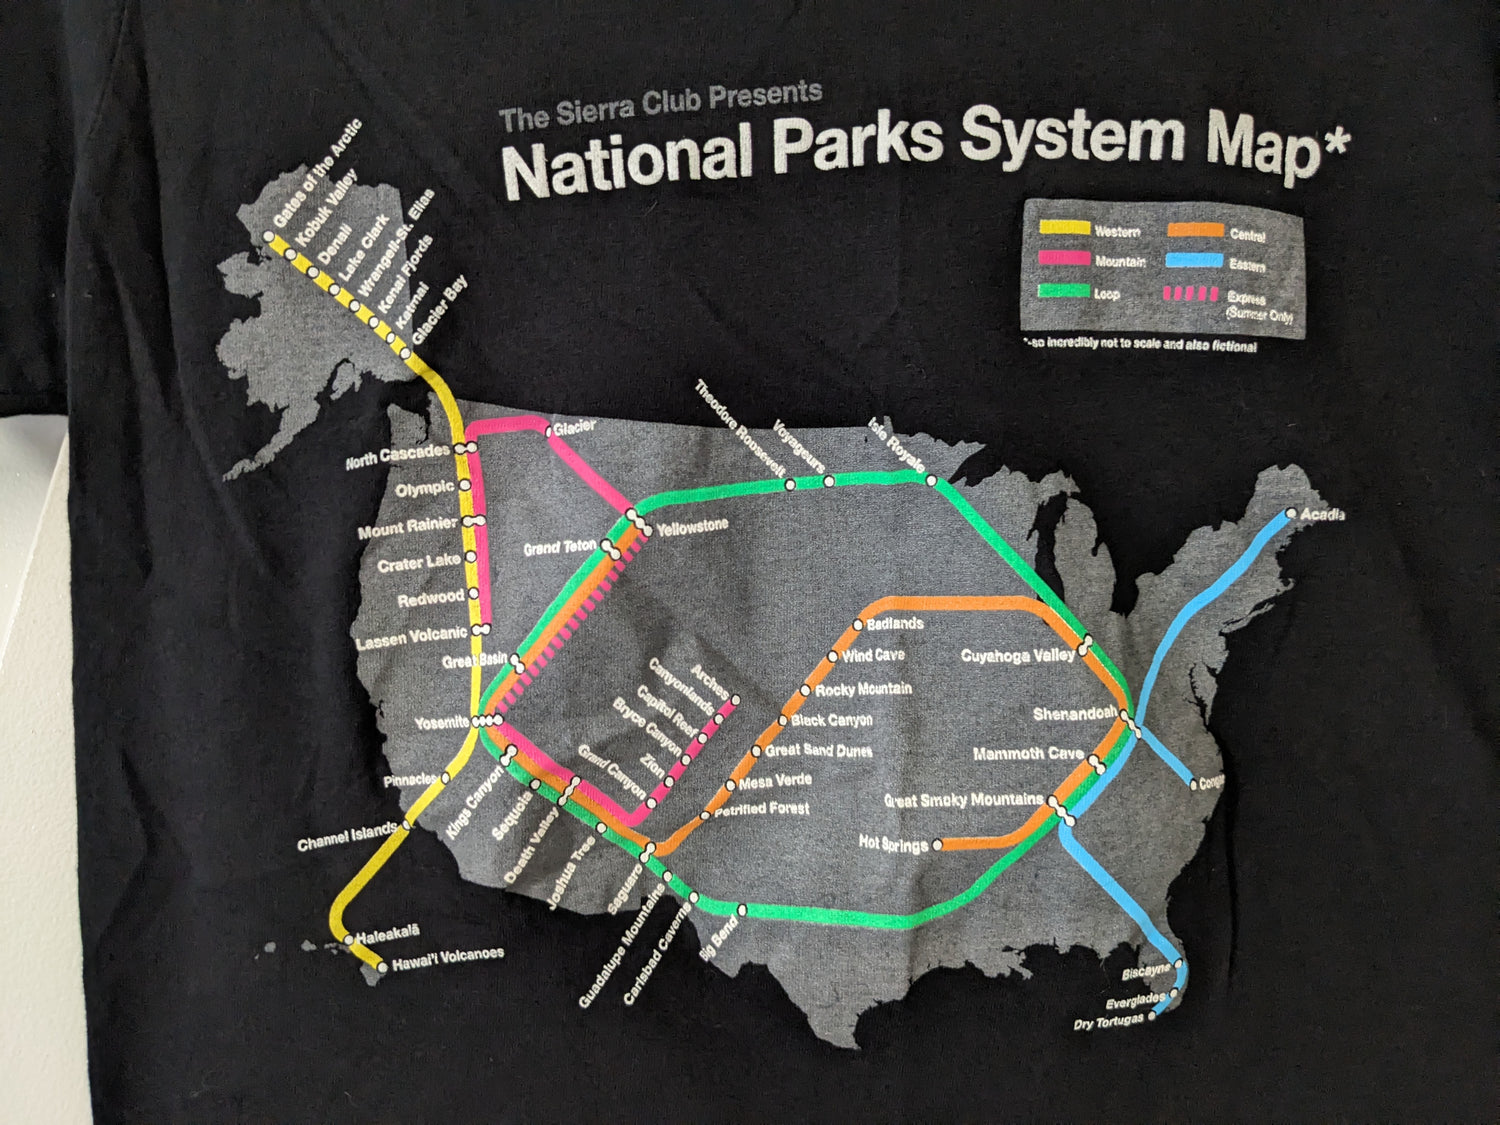 Sierra Club National Park System Map black shirt graphic up close